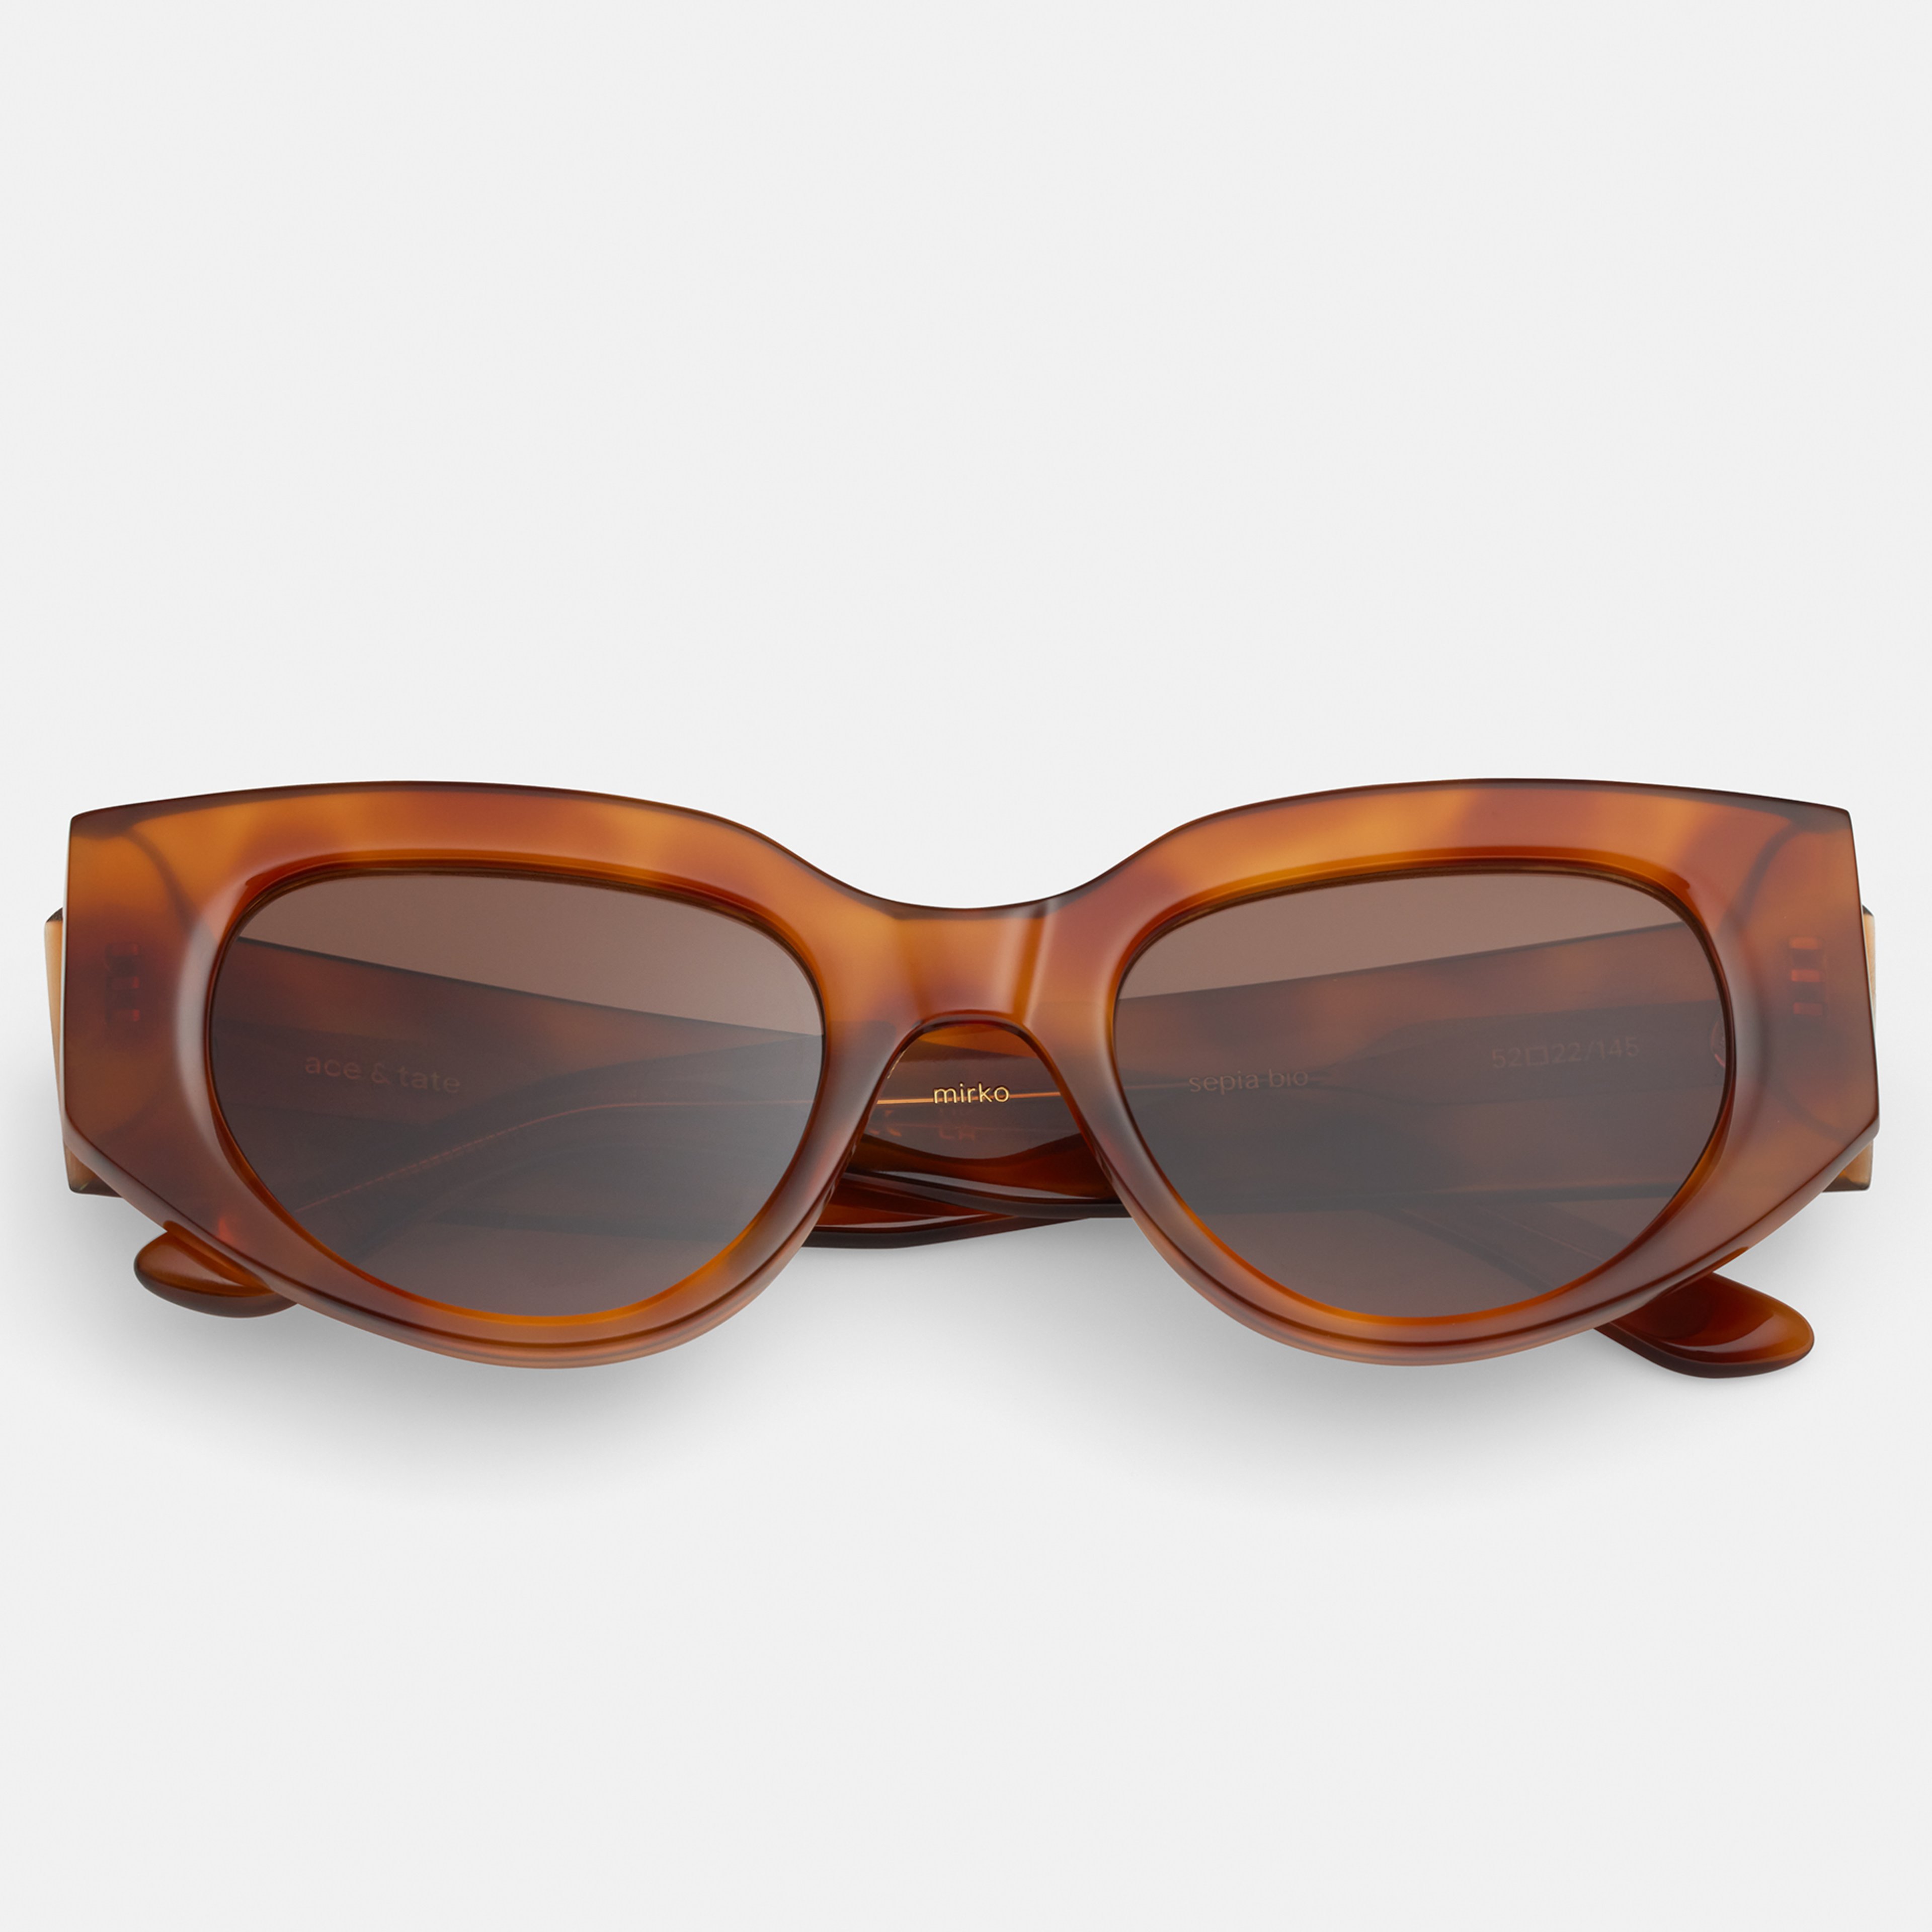 Ace & Tate Gafas de sol | oval Acetato bío in Marrón